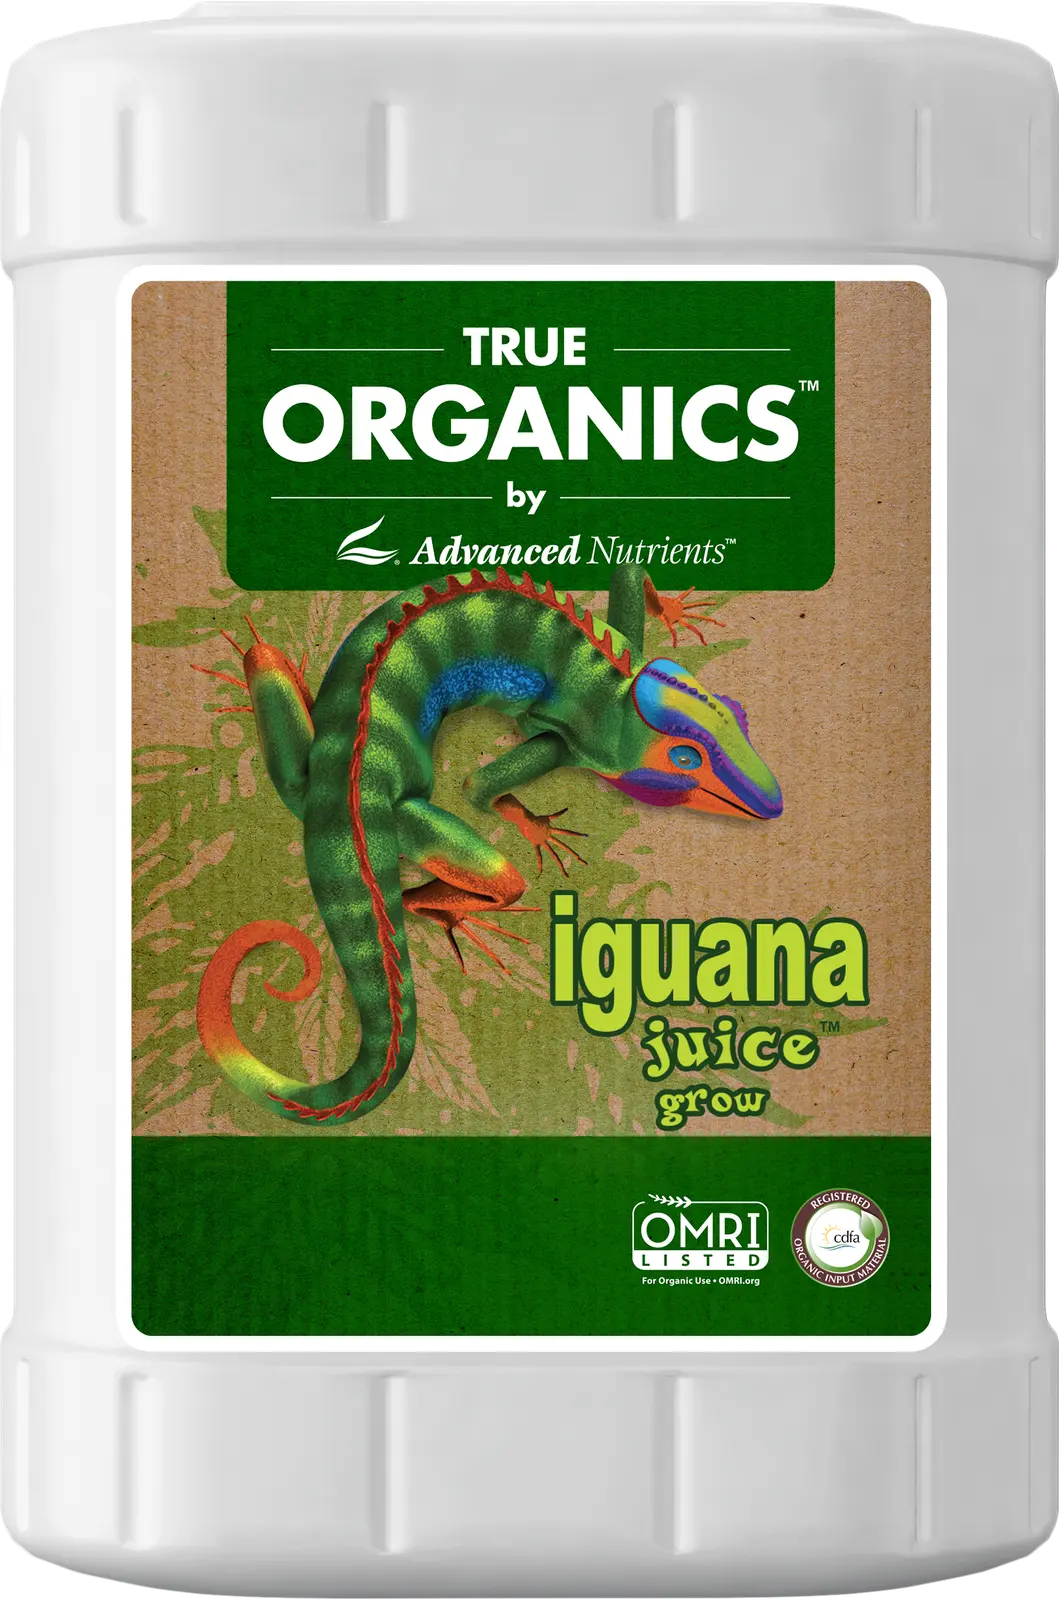 Advanced Nutrients Iguana Juice Grow OG Organics Advanced Nutrients